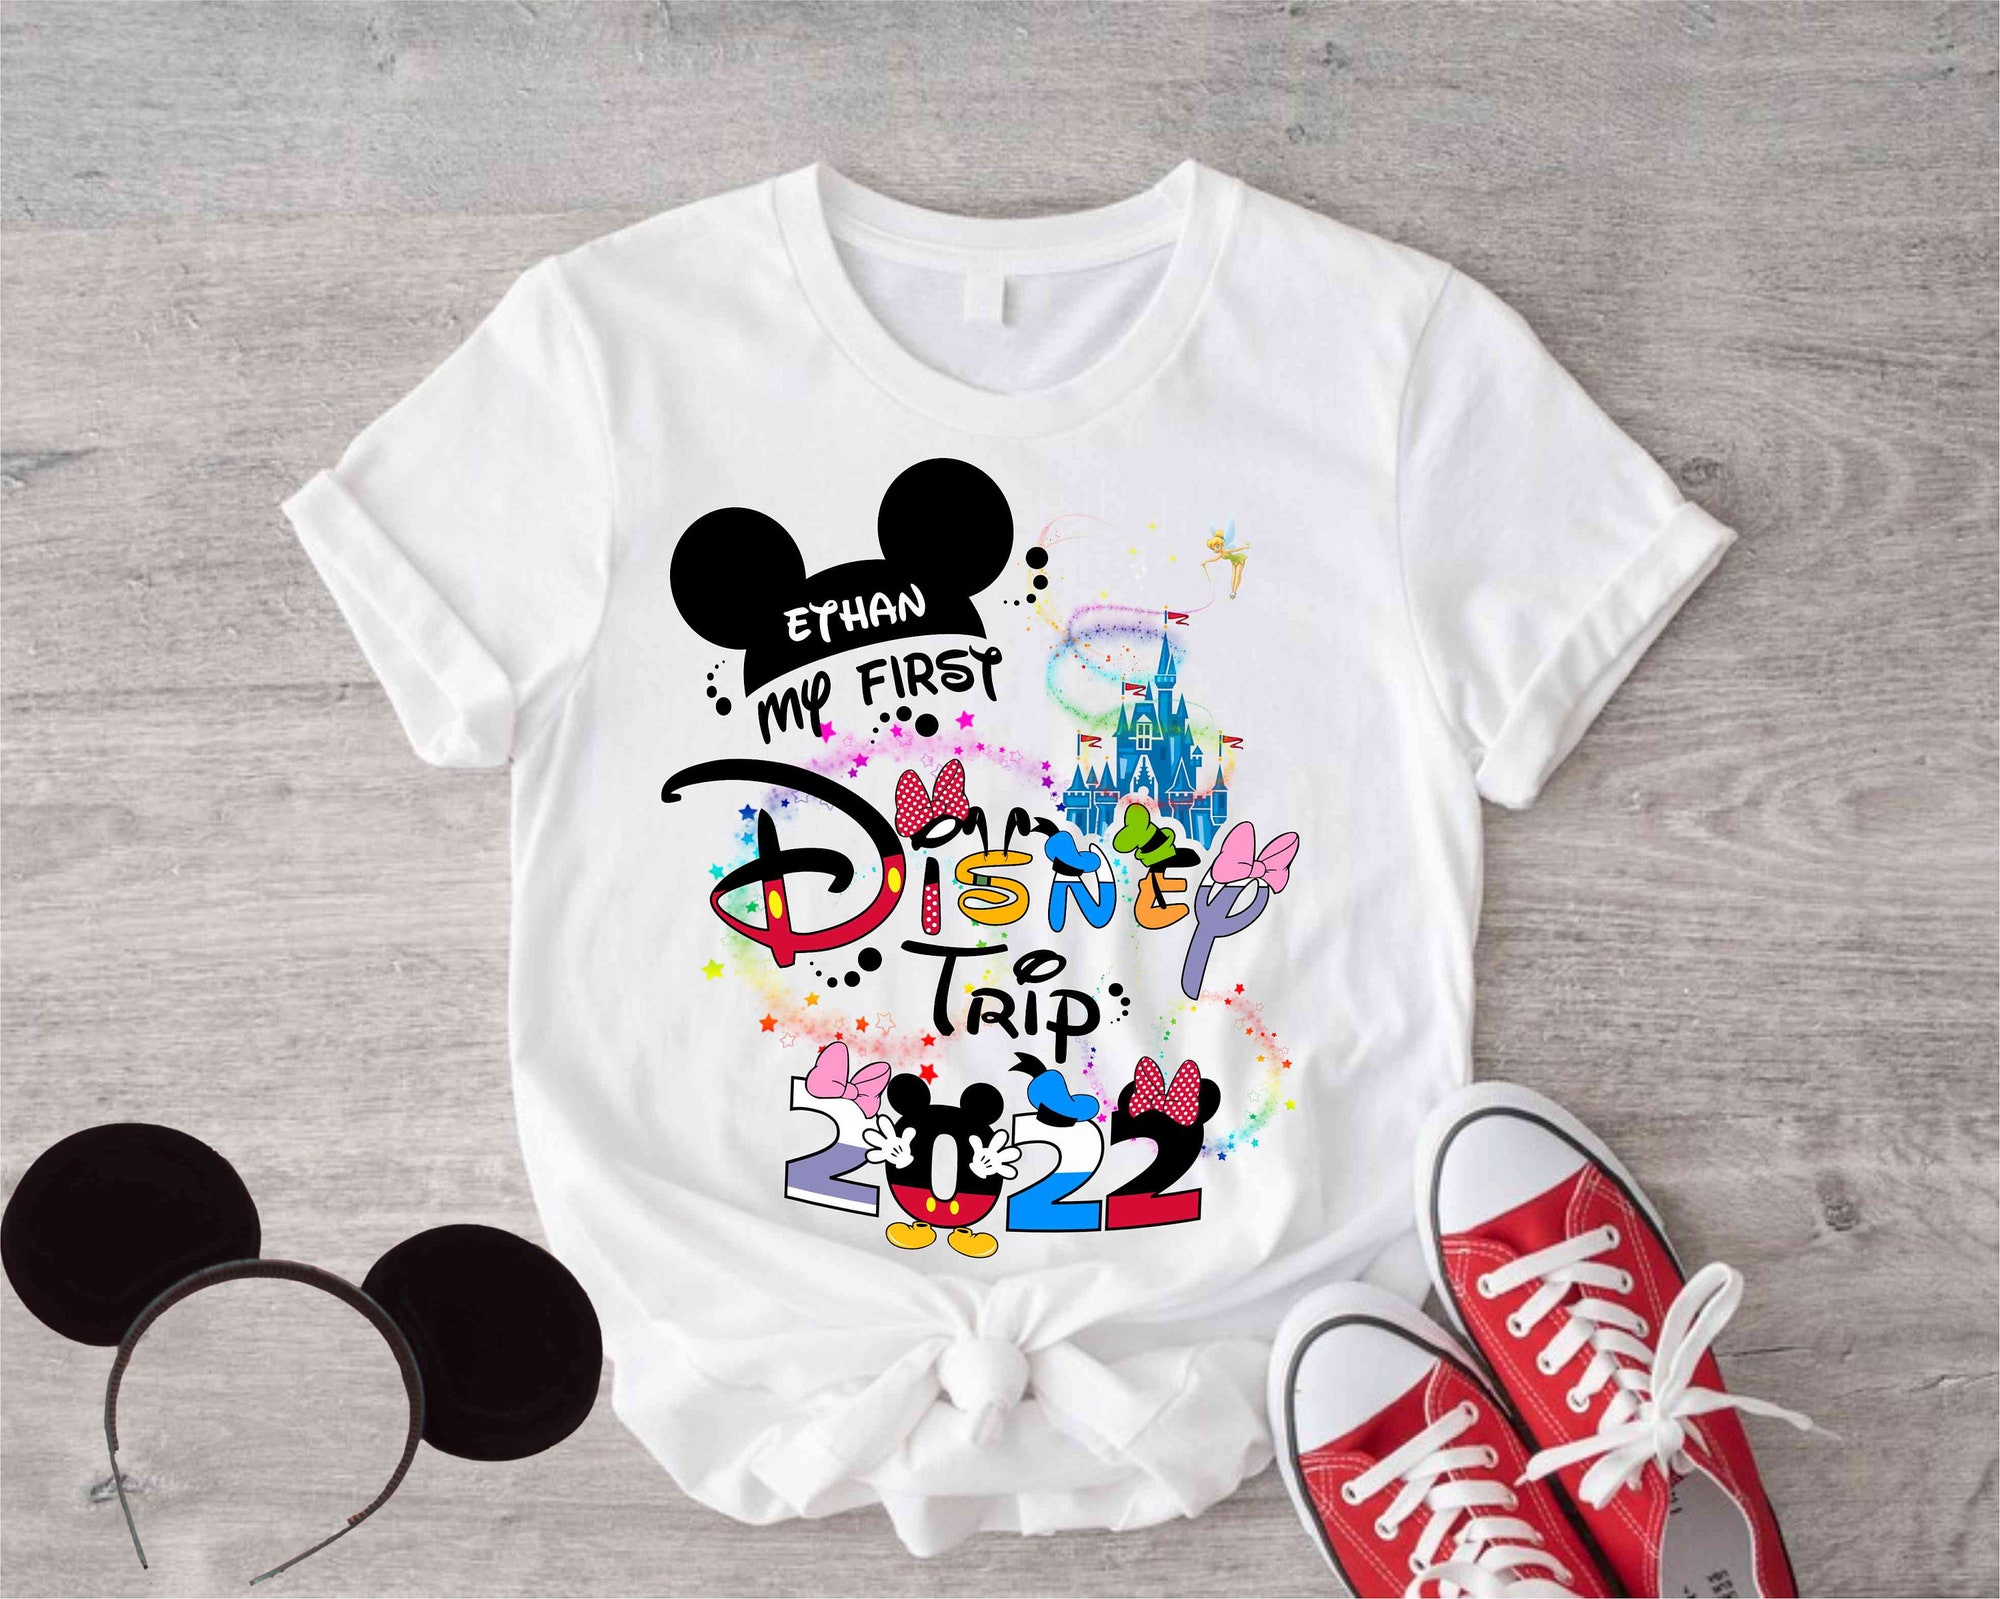 Disney Family vacation 2022 Shirts, Magic Kingdom shirt, Disneyland 2022 Shirt